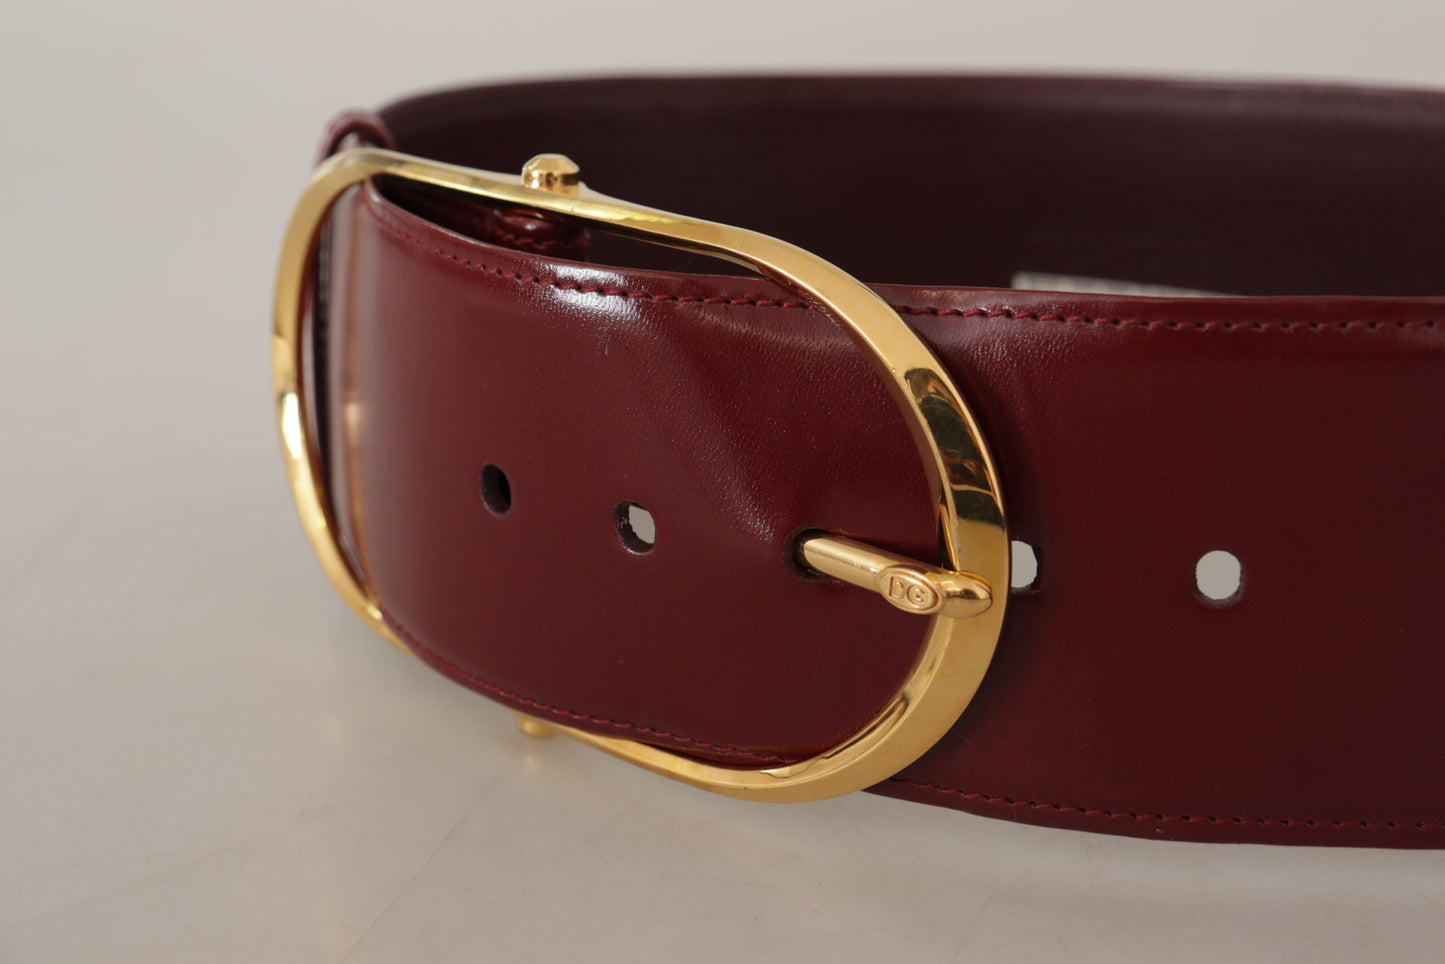 Dolce &amp; Gabbana Maroon Wide Leather Gold Tone Metal Oval Buckle Belt